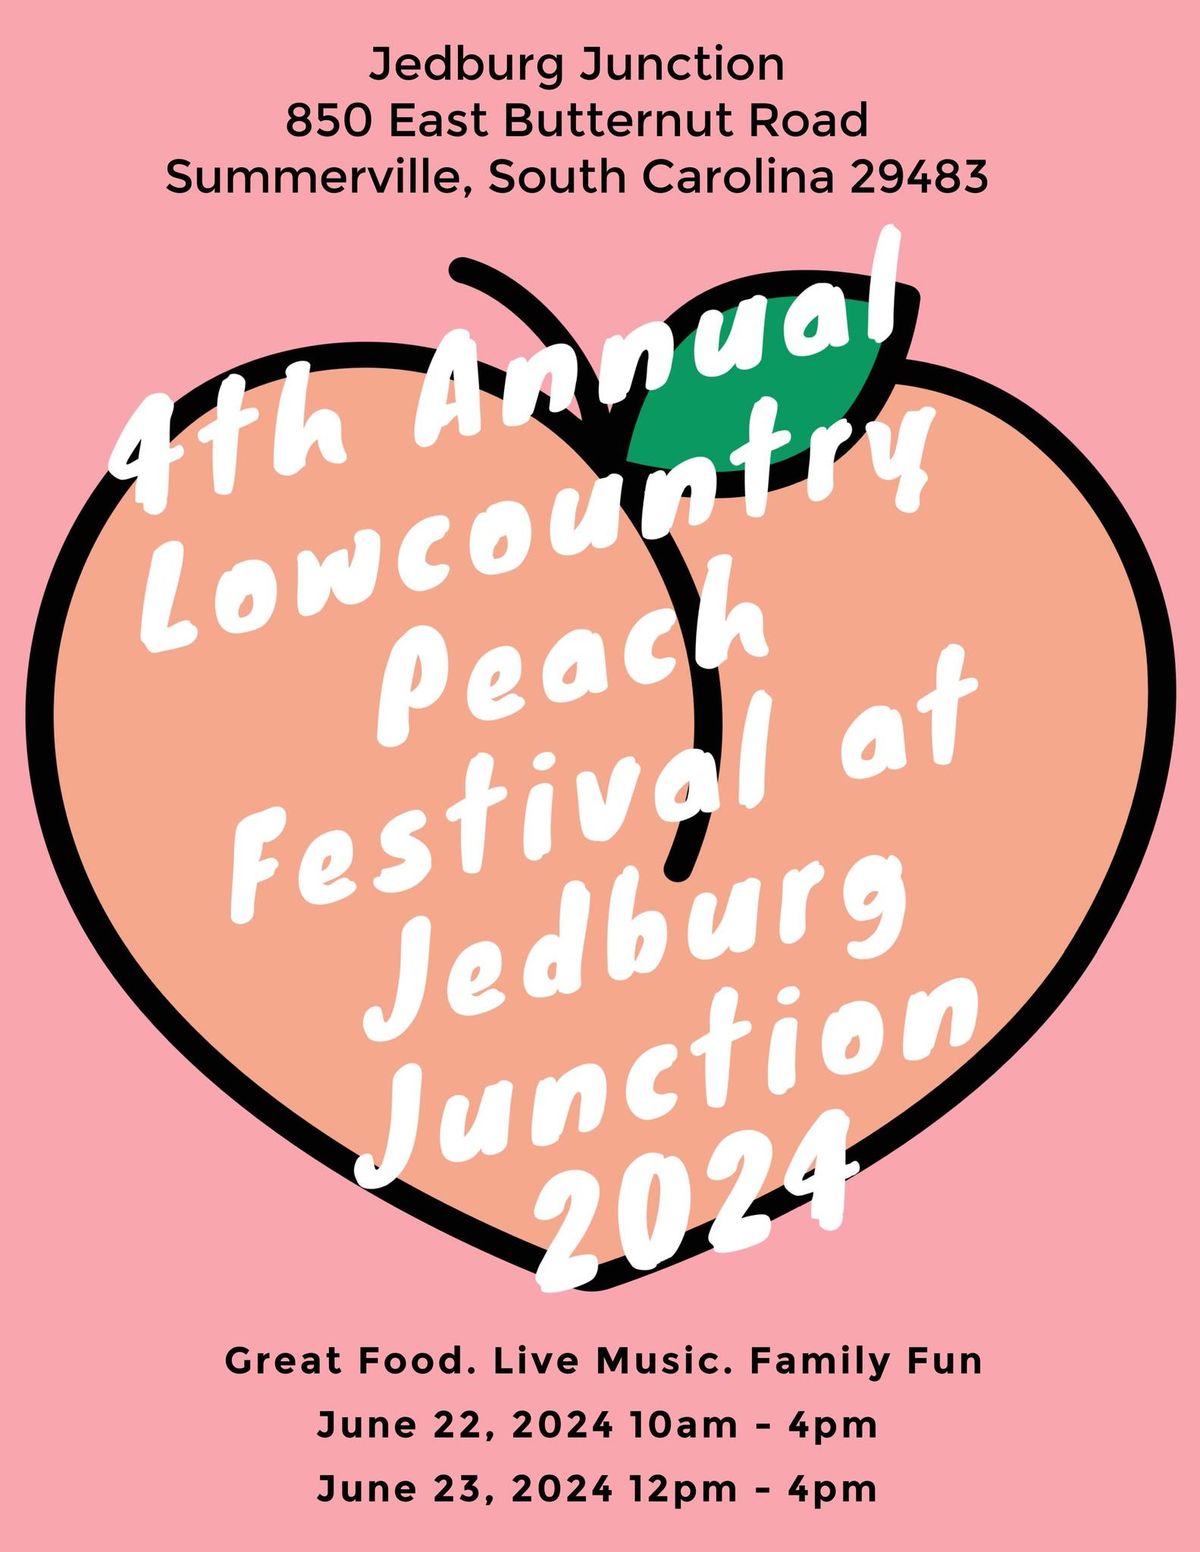 4th Annual Lowcountry Peach Festival at Jedburg Junction